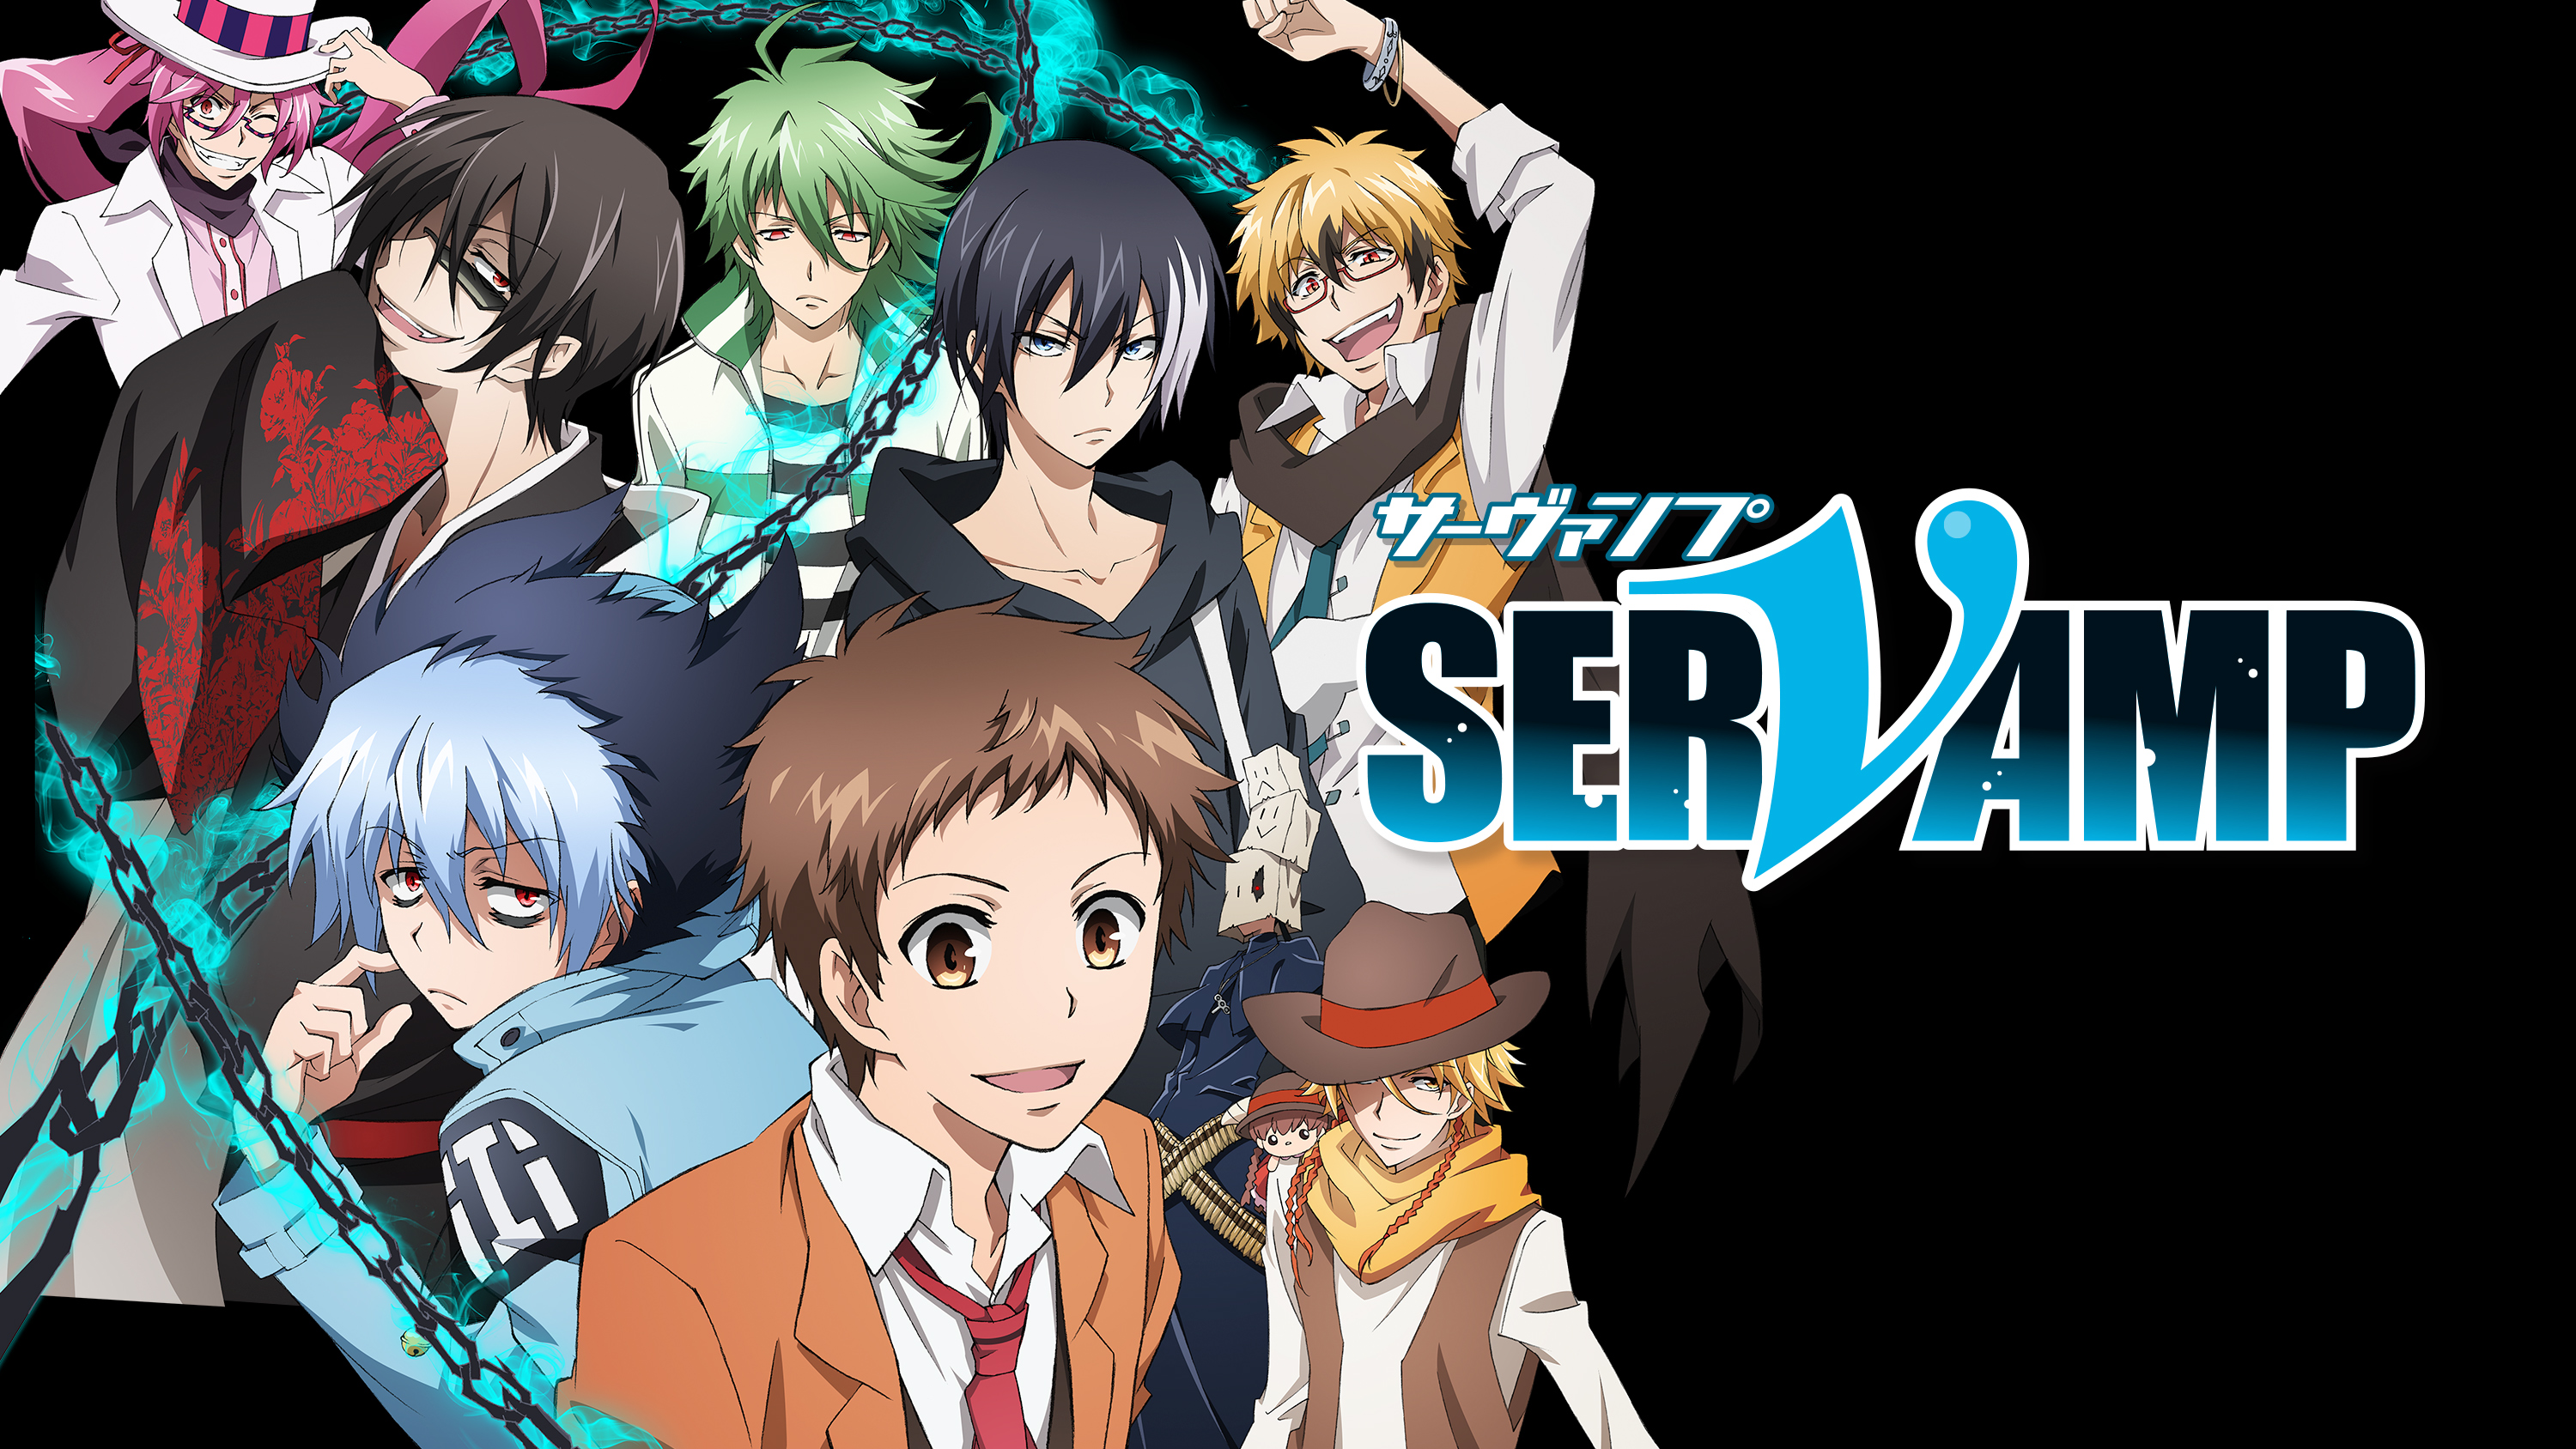 Watch Servamp Sub & Dub | Action/Adventure, Fantasy Anime | Funimation